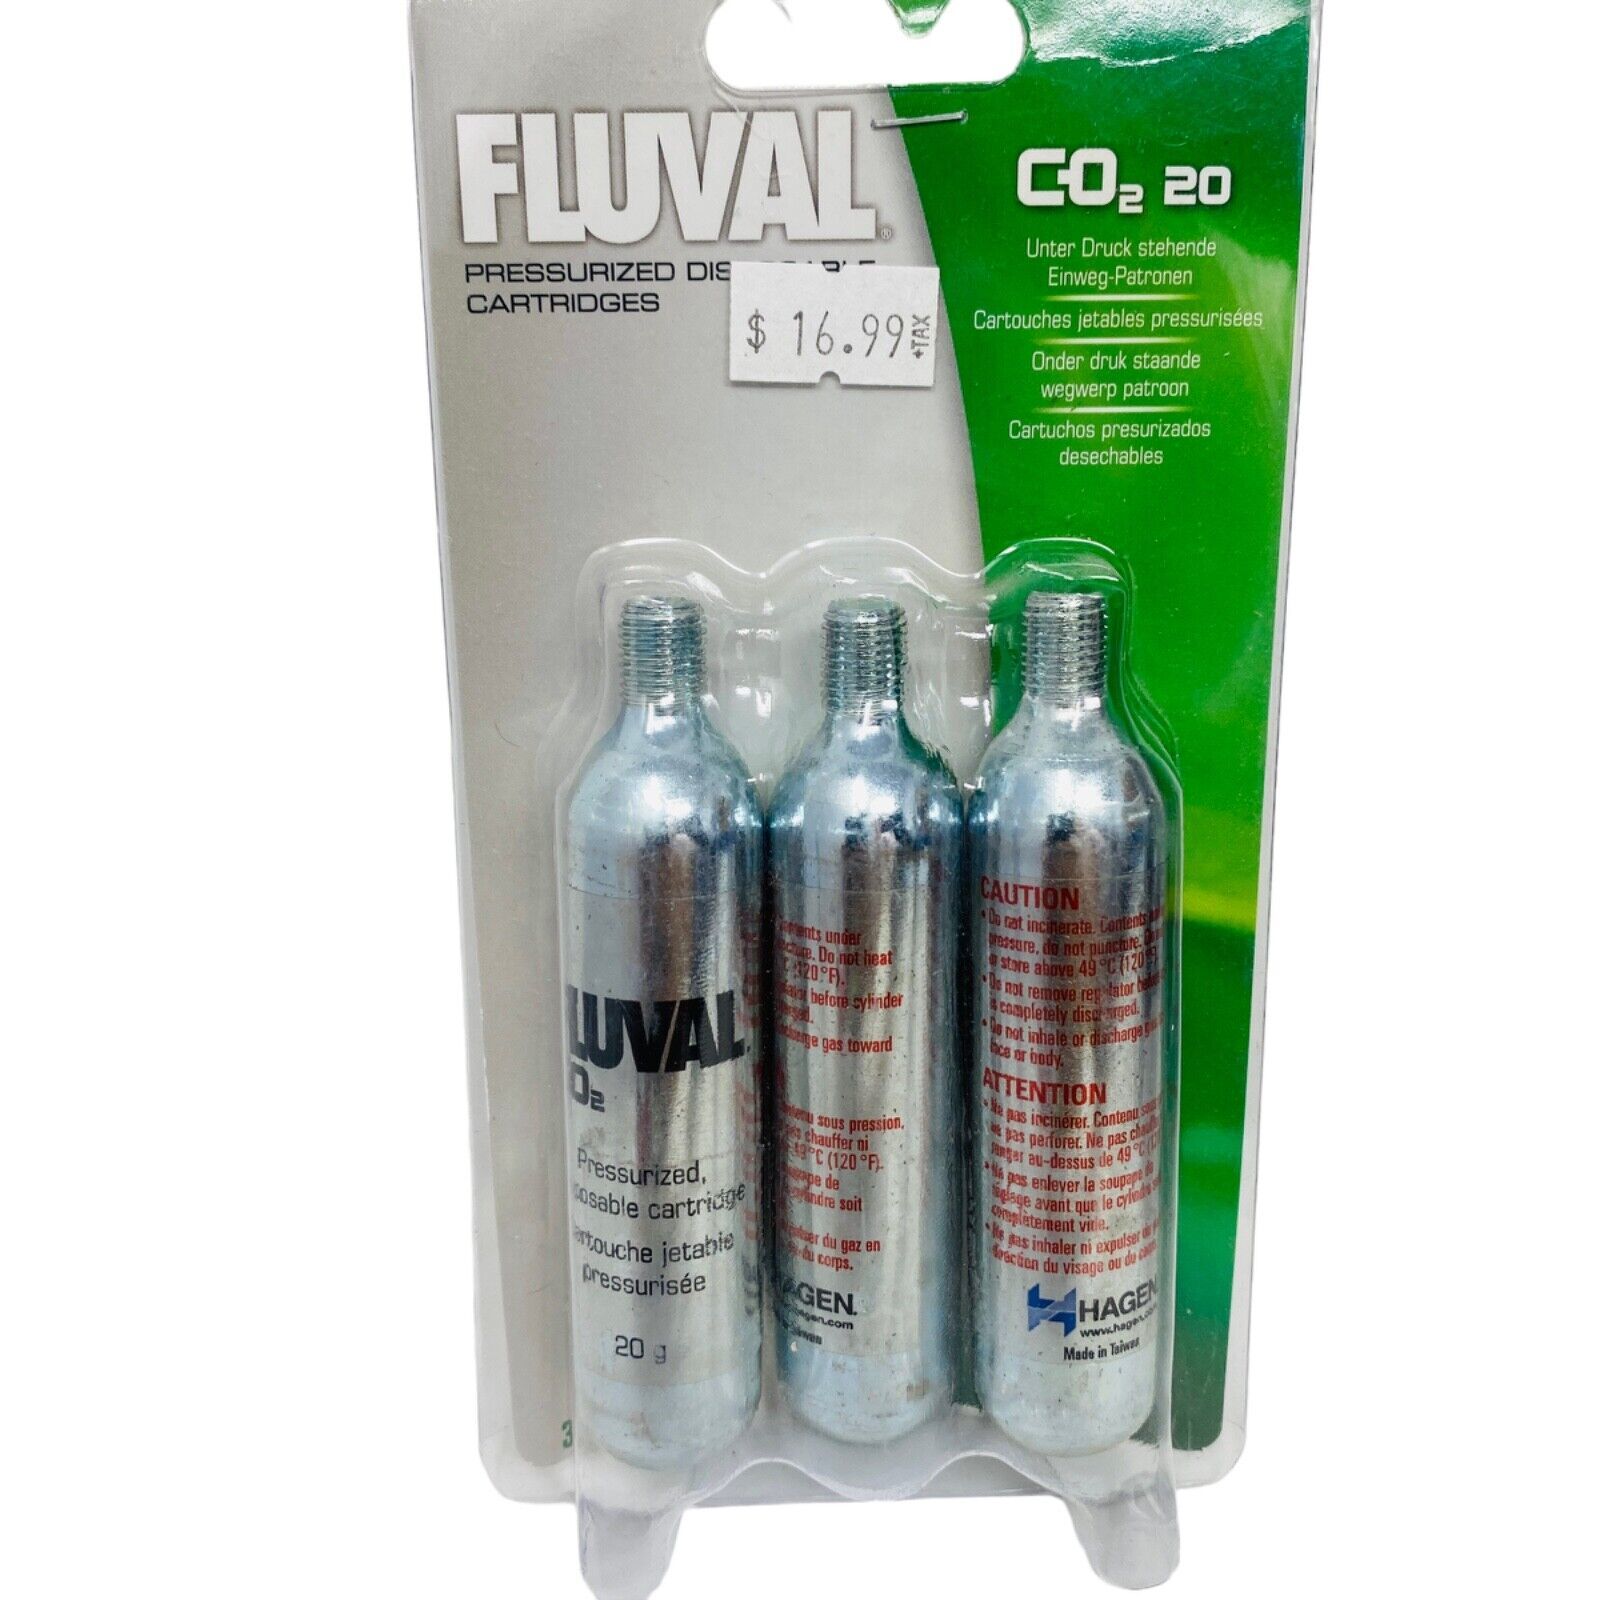 Hagen Fluval Mini Pressurized Disposable CO2 Cartridges 0.7oz (20g) 3pk #7541 - $16.82